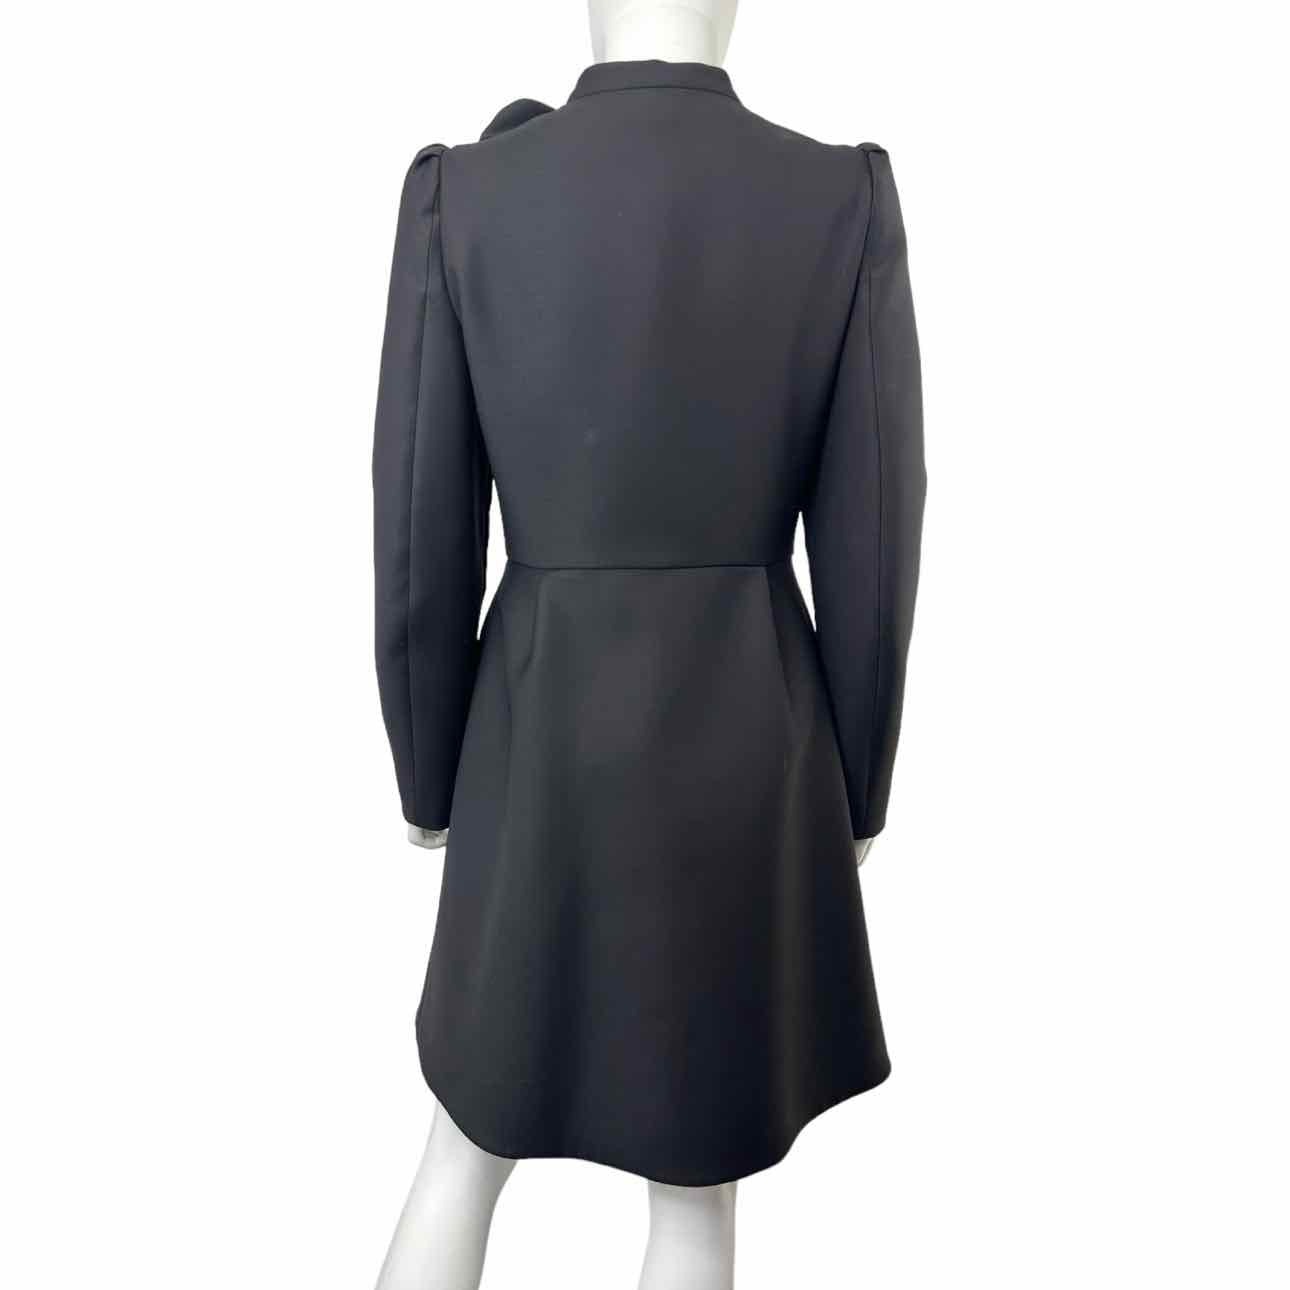 VALENTINO TECHNOCOUTURE Black 2 Piece Dress and Jacket, black semi formal dress and jacket